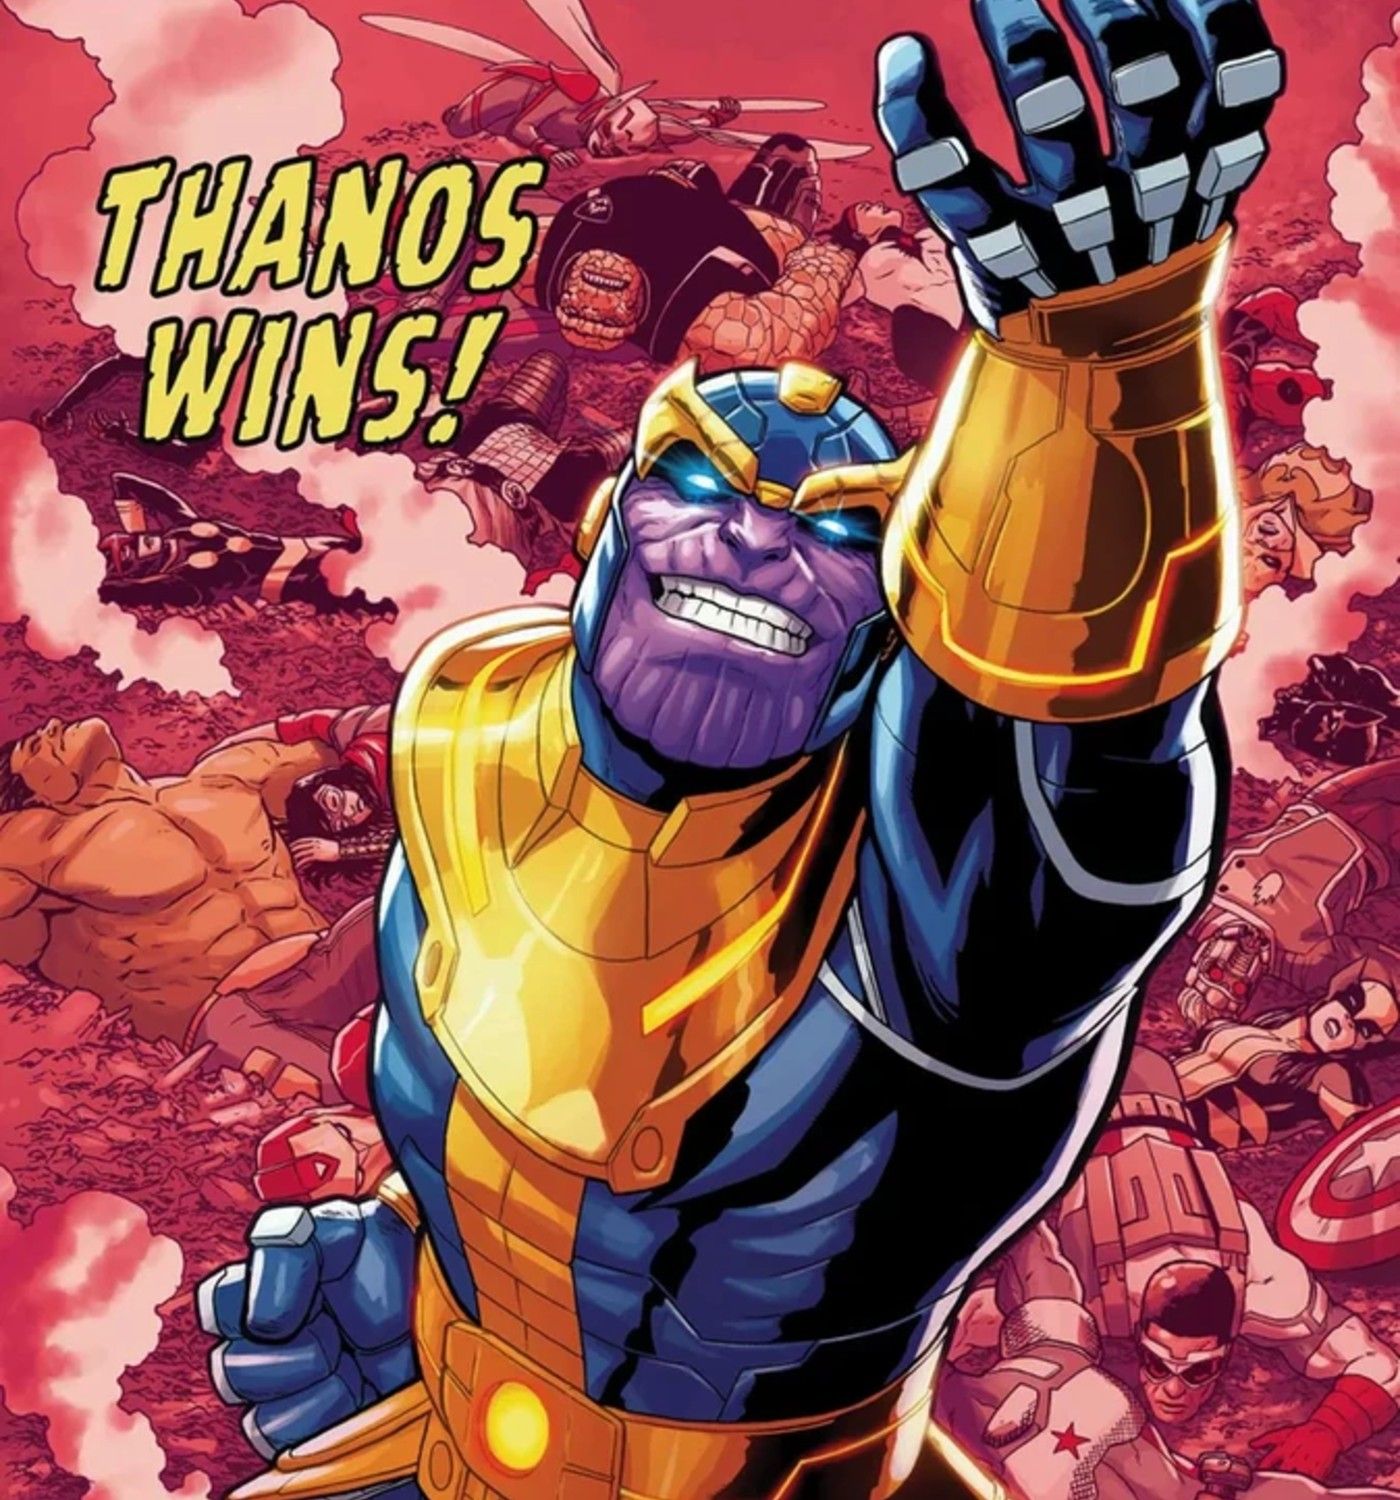 Thanos wins